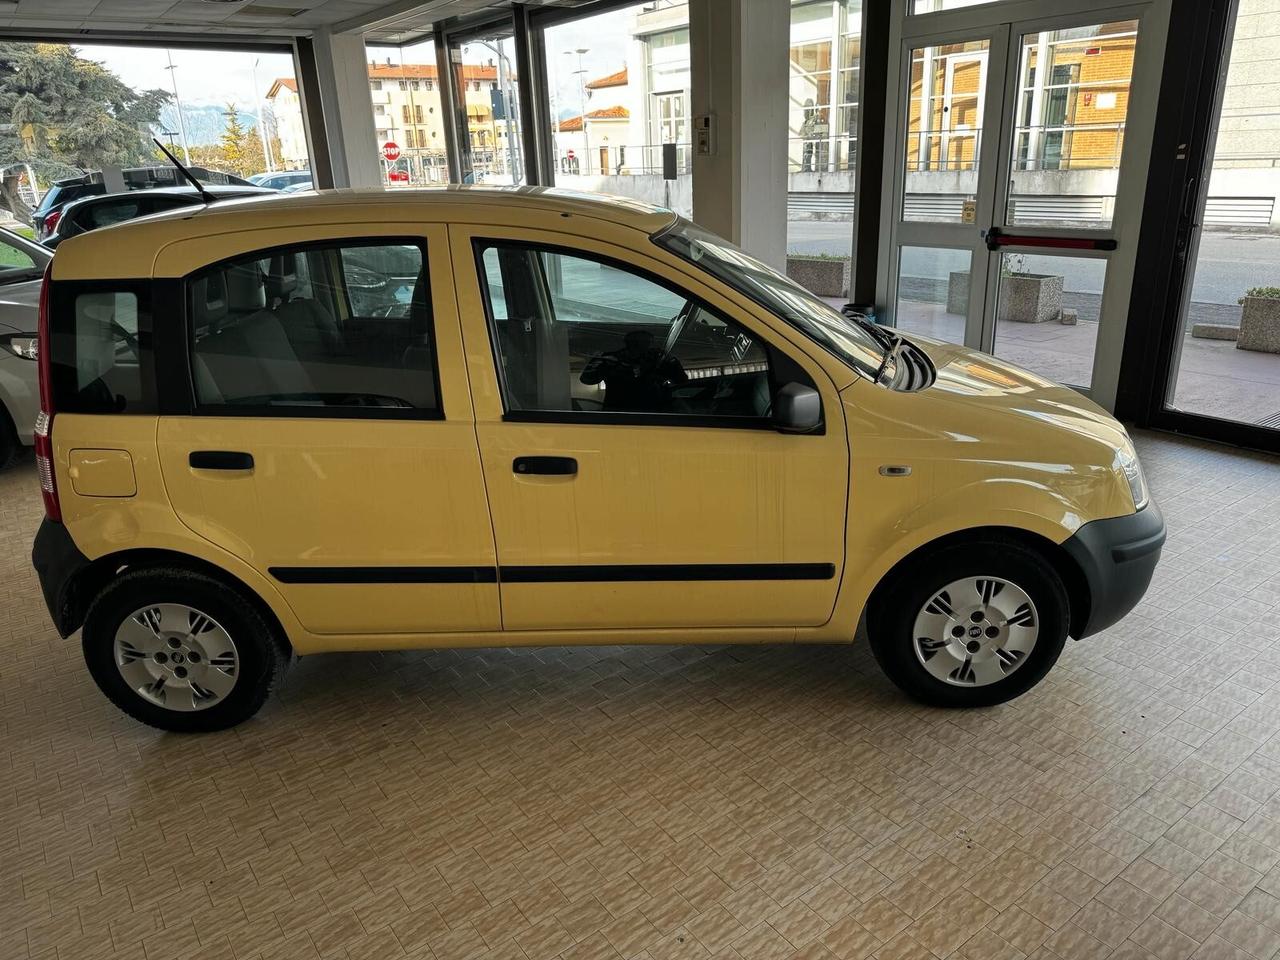 Fiat Panda 1.1 Active